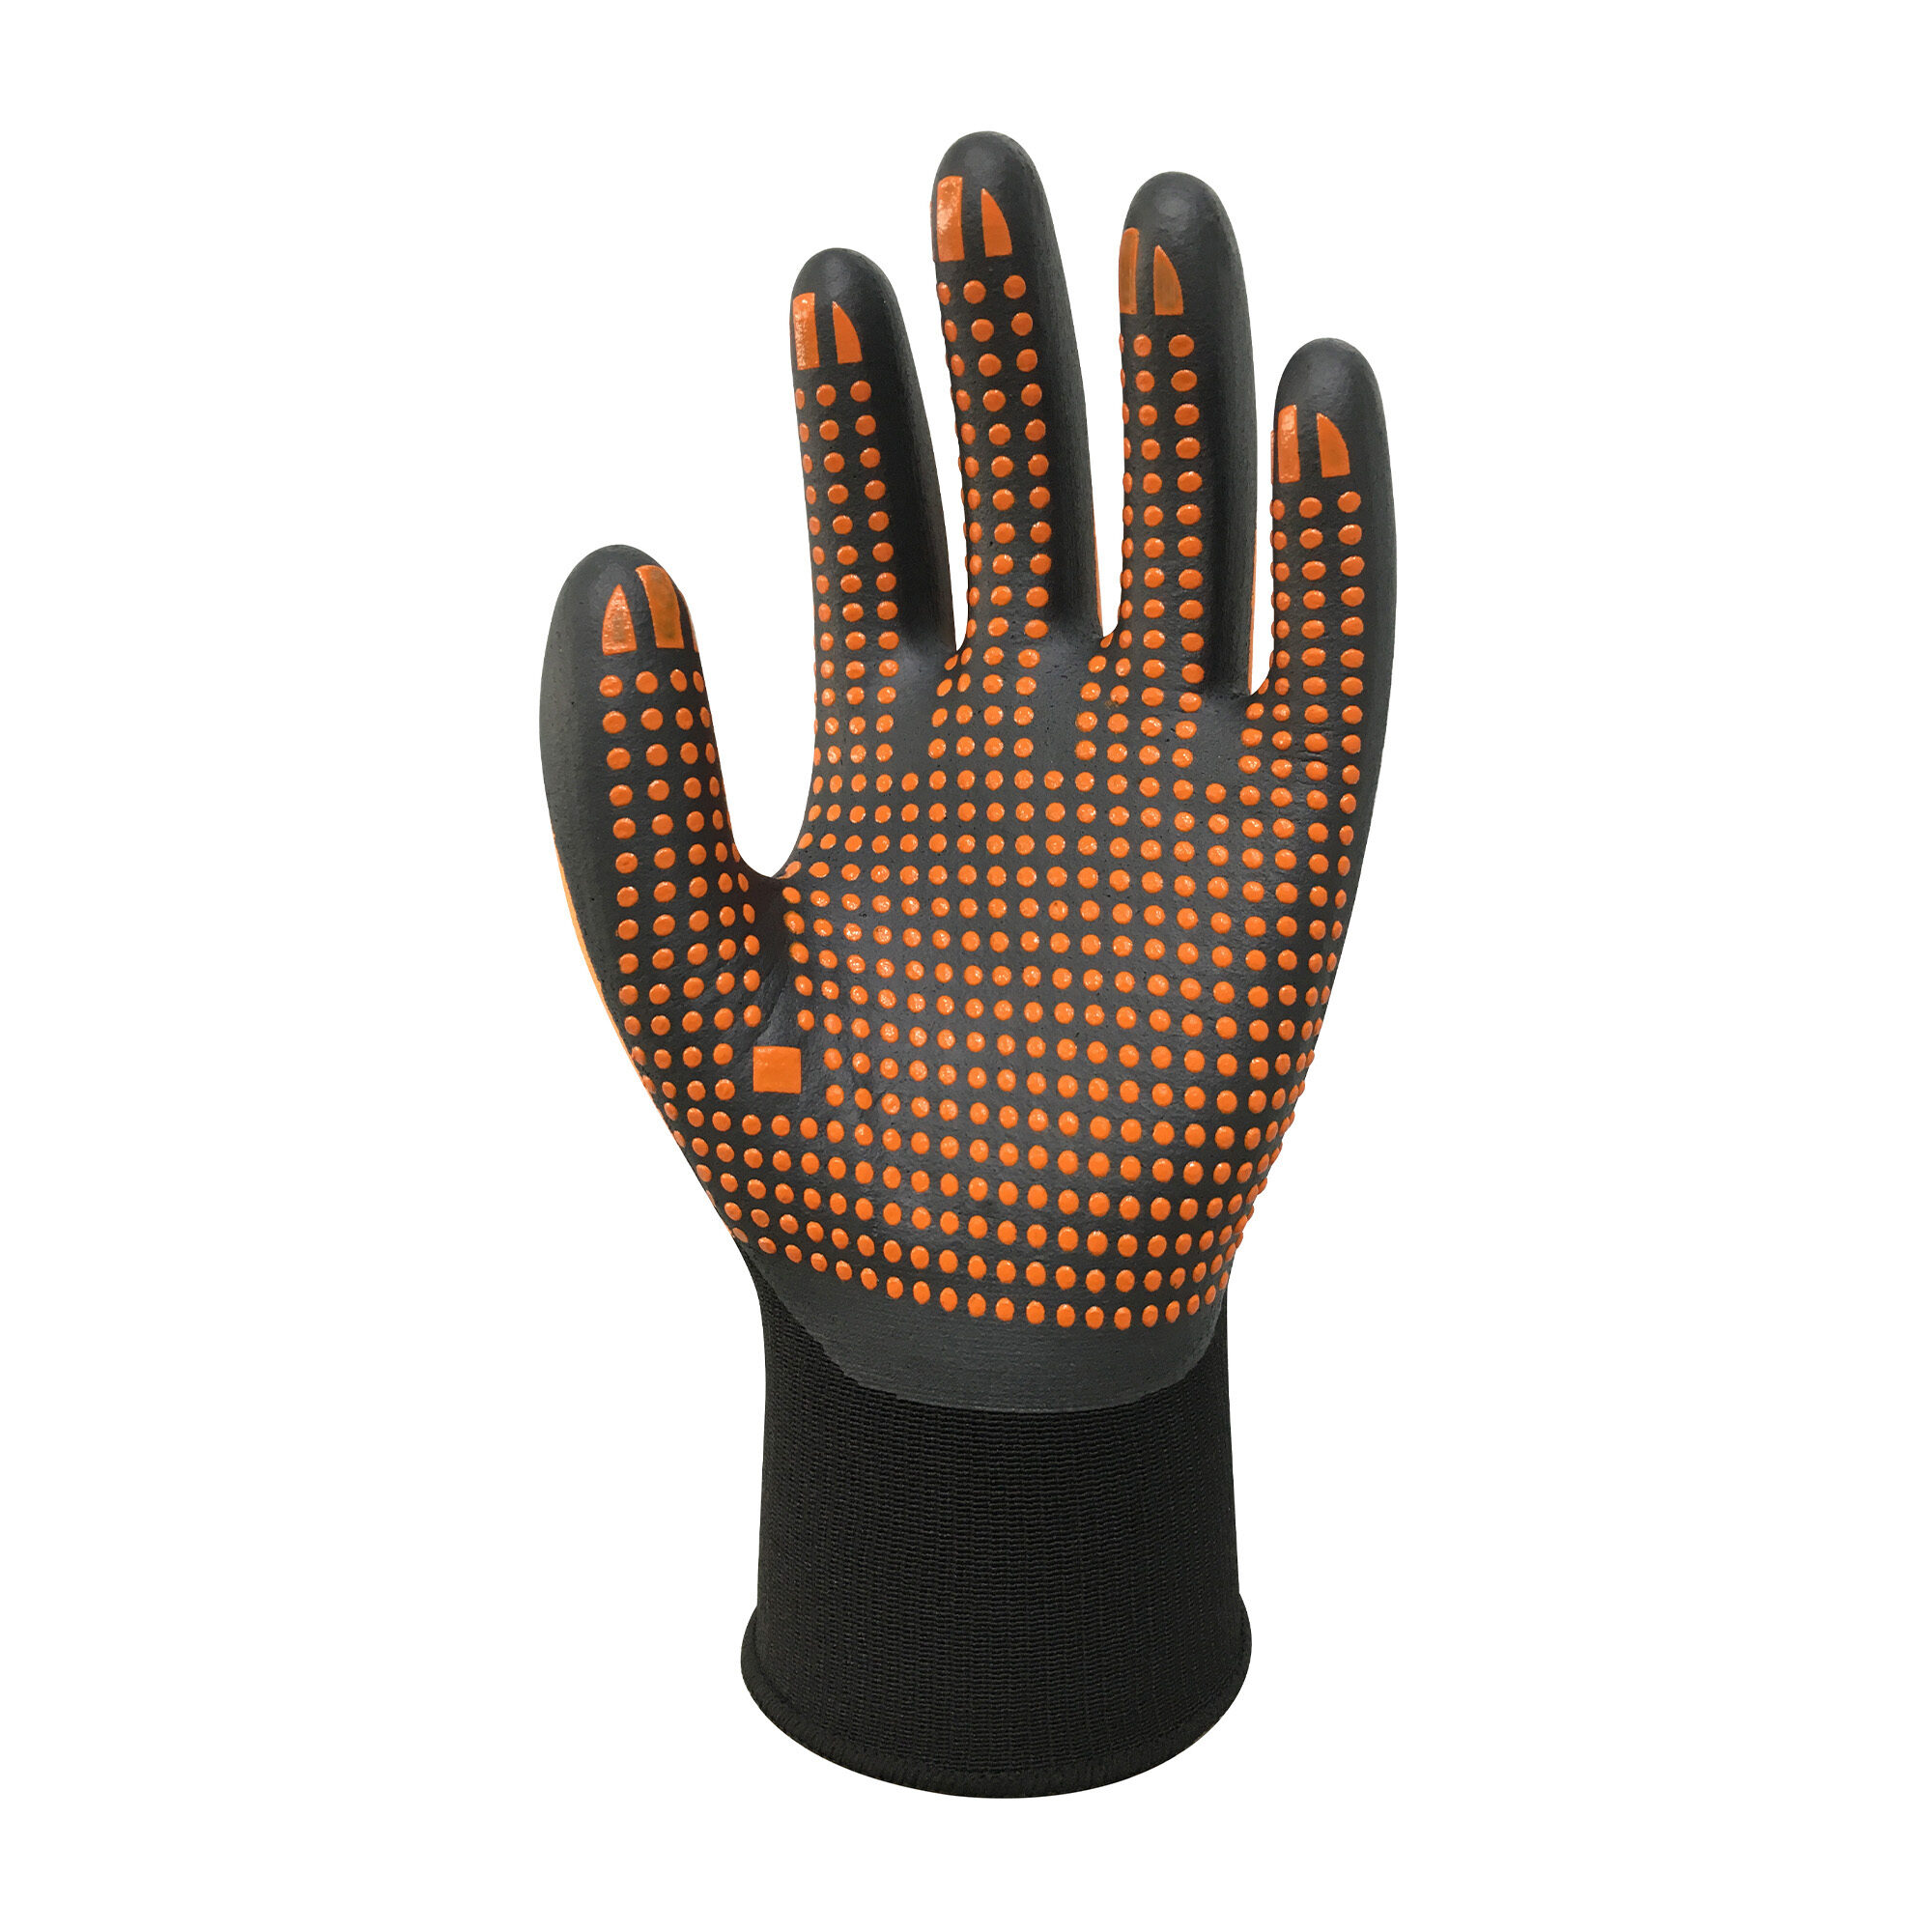 Wonder Grip WG 733+ DEXCUT Heavy Work Gloves - Cut Level A4